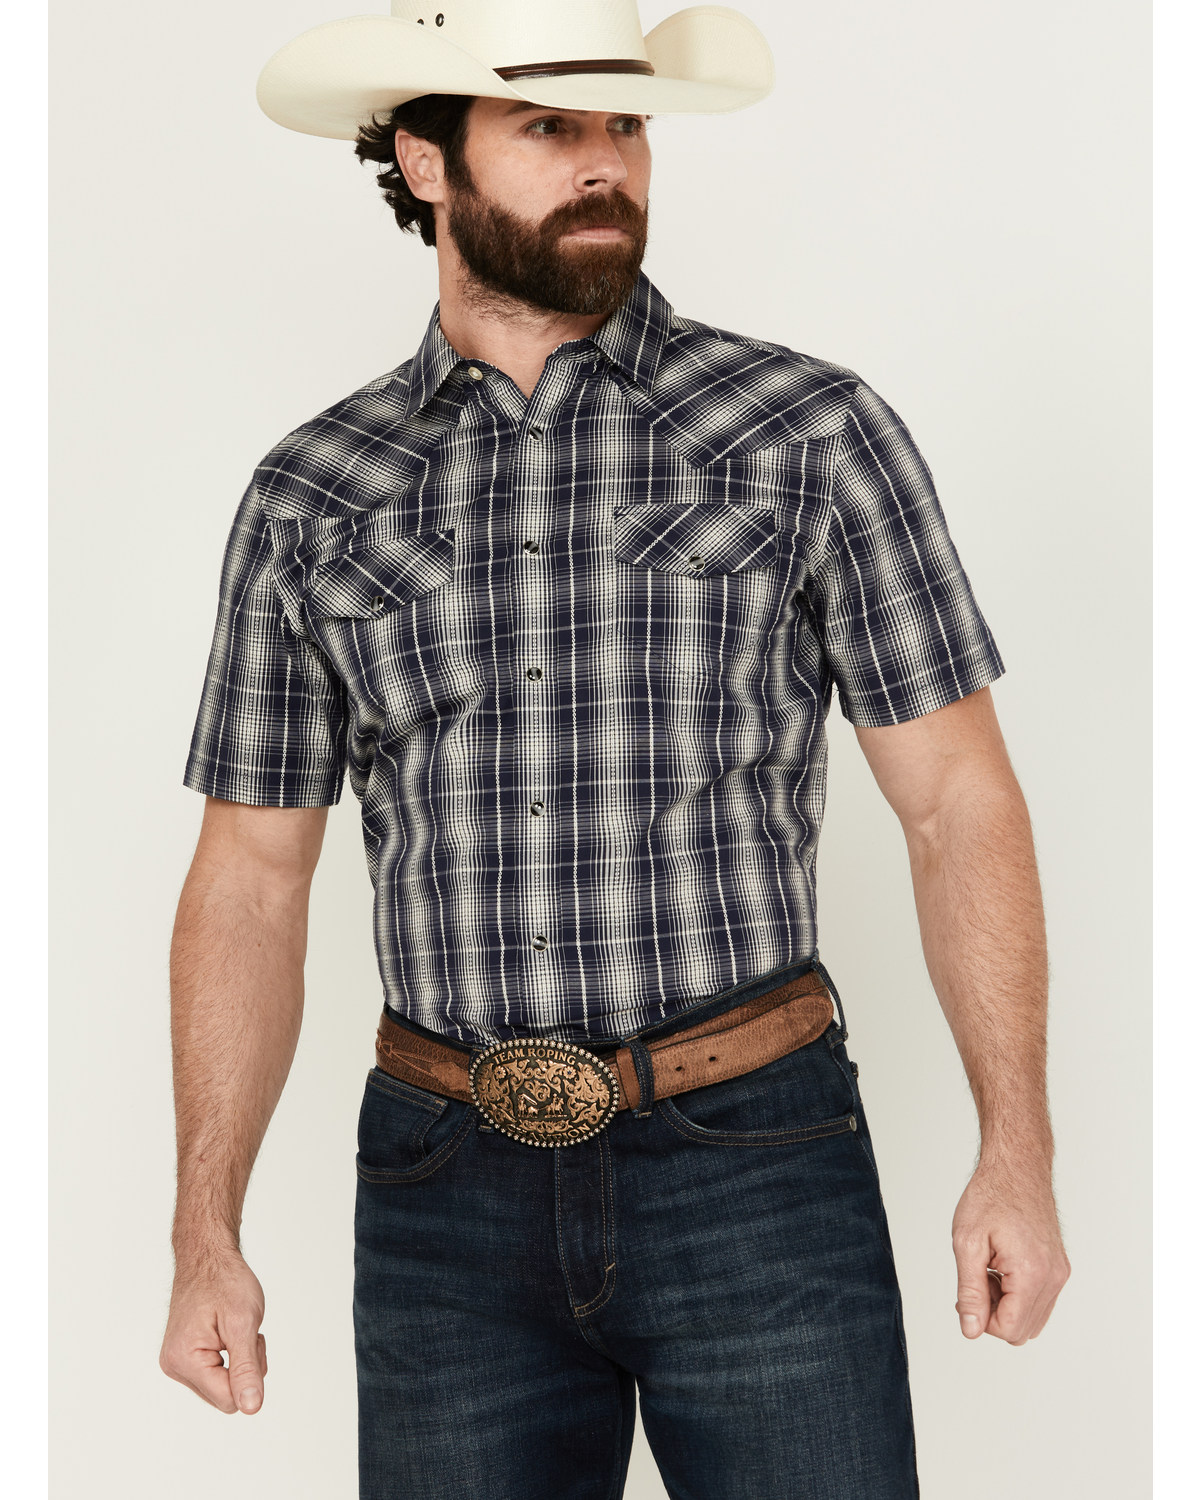 Gibson Men's Chain Link Plaid Print Short Sleeve Snap Western Shirt